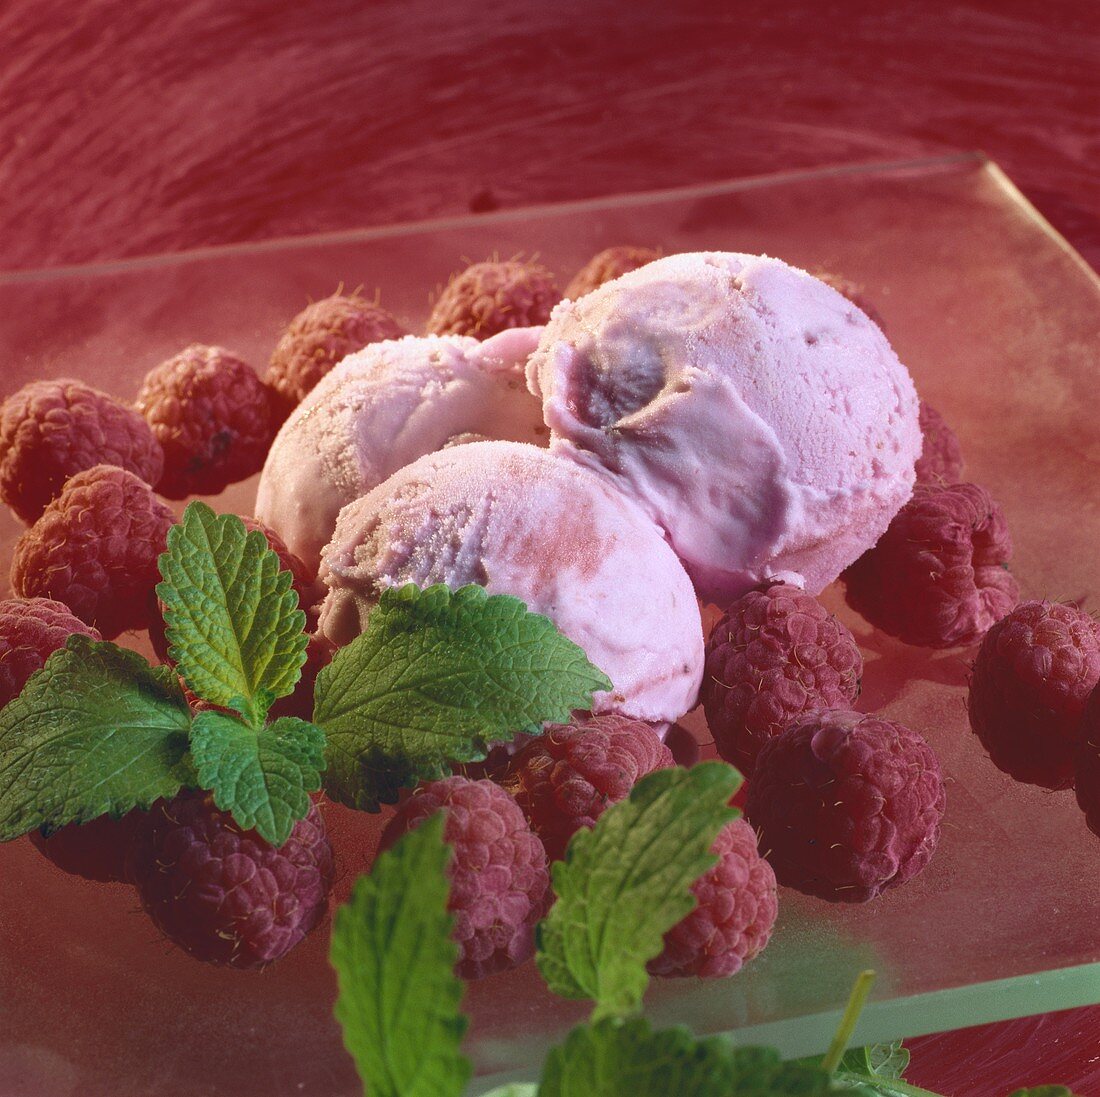 Raspberry ricotta ice cream with fresh mint